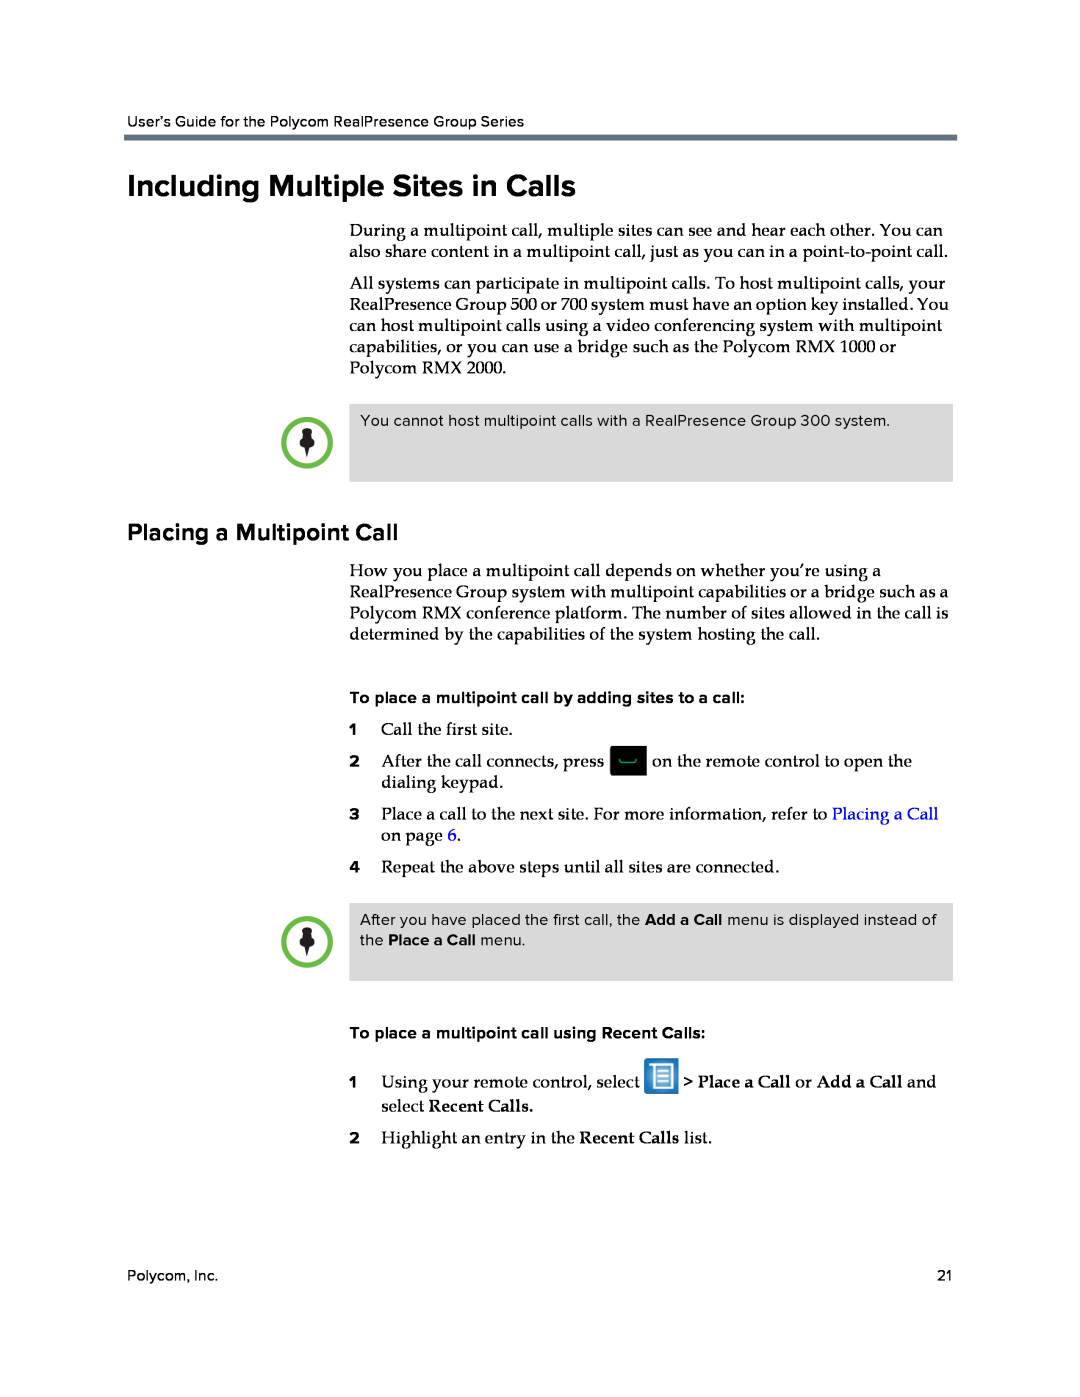 Polycom P001 Including Multiple Sites in Calls, Placing a Multipoint Call, To place a multipoint call using Recent Calls 